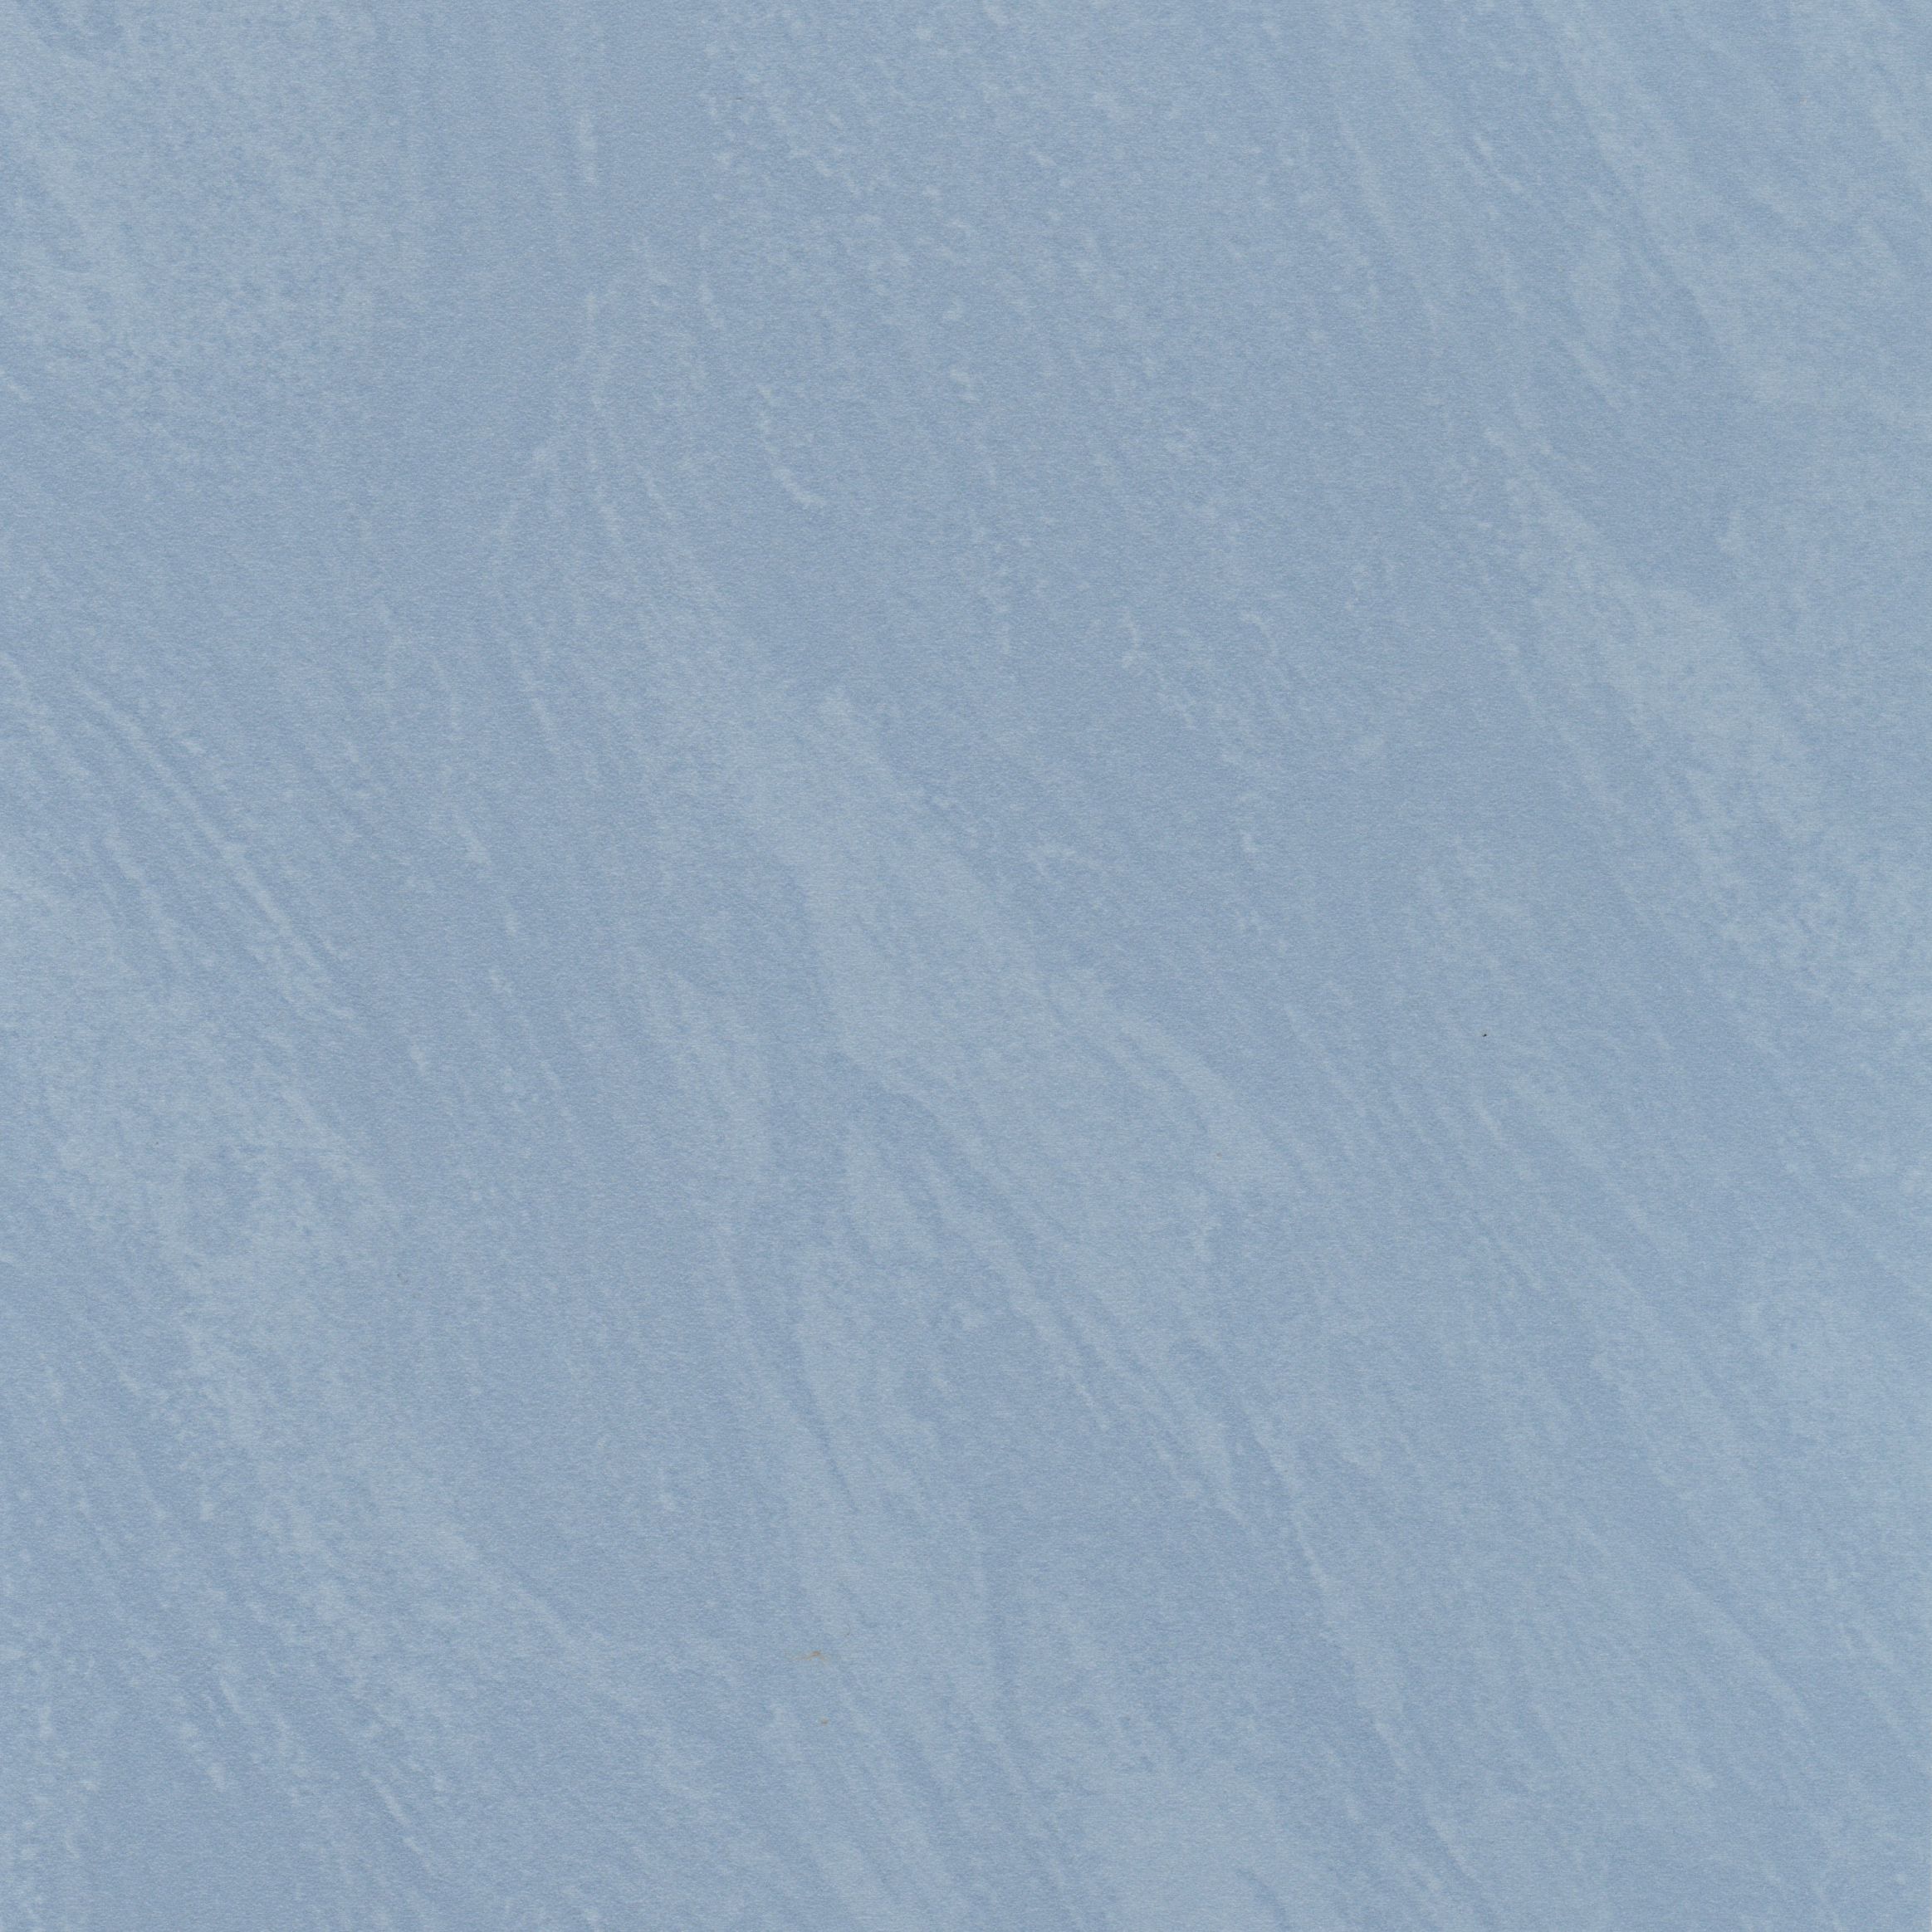 Splashwall Majestic Sky blue Clean cut 2 sided Shower Panel kit (L)2420mm (W)1200mm (T)11mm